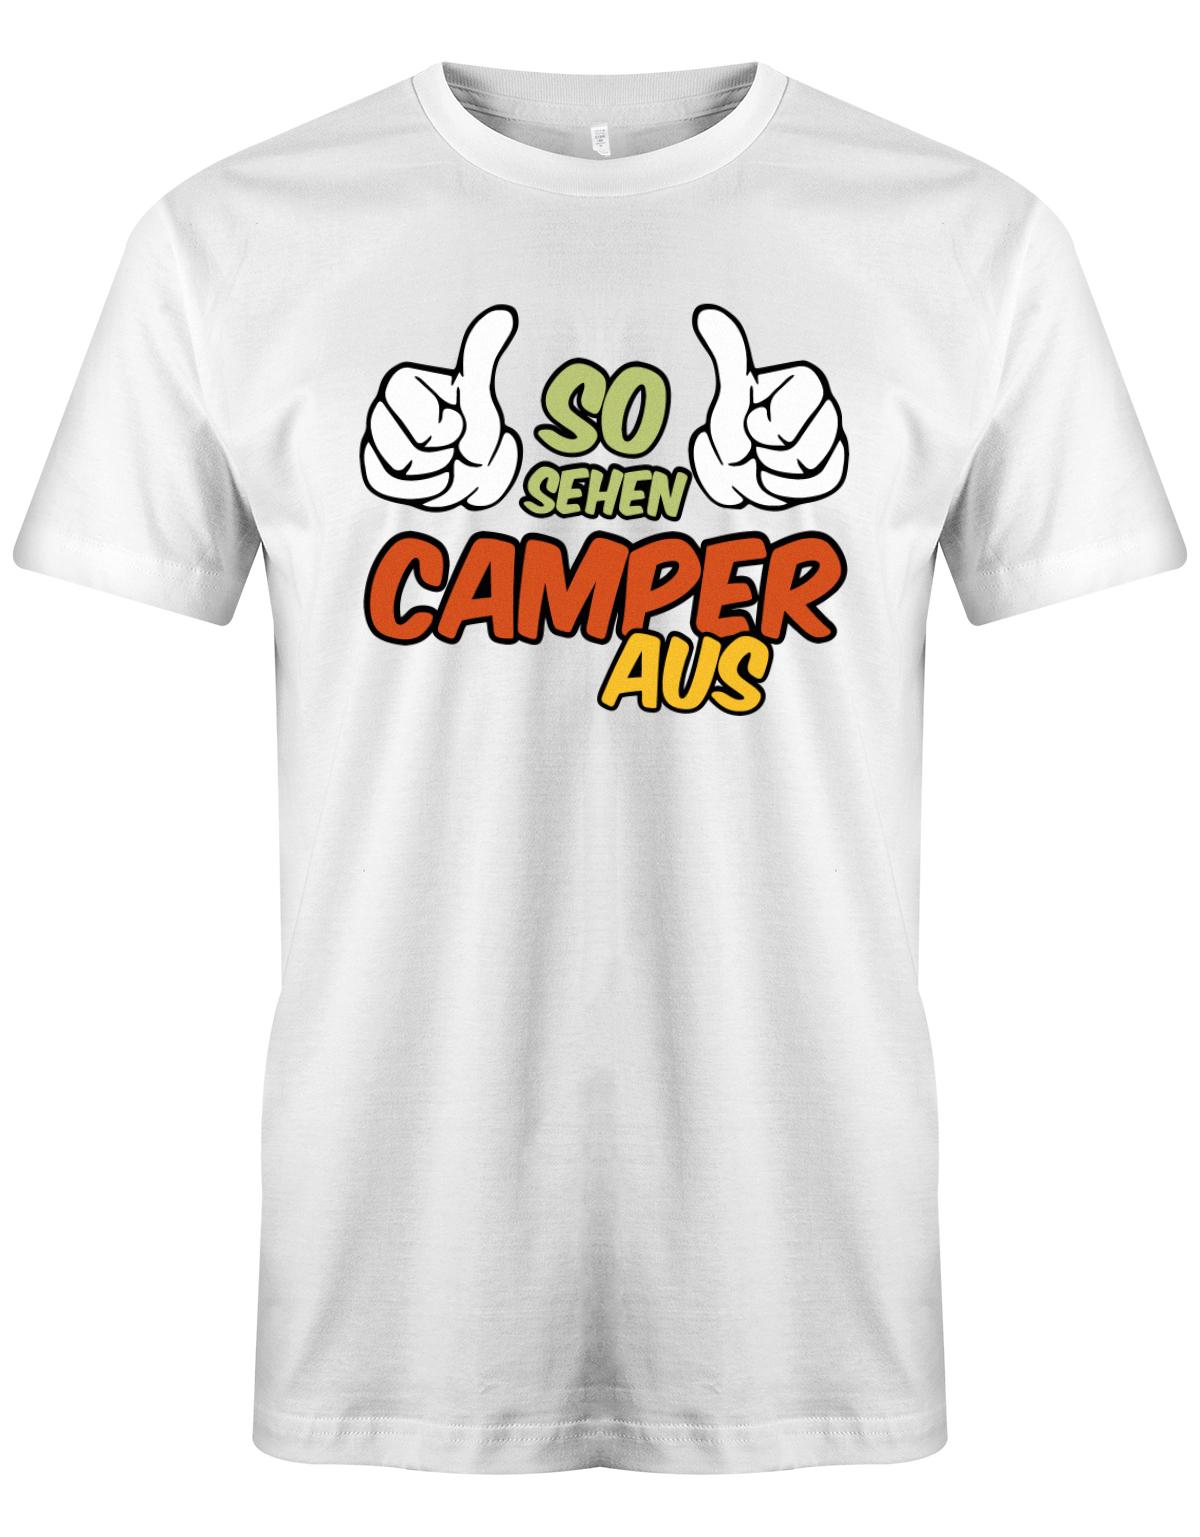 So-sehen-Camper-aus-Herren-Camping-Shirt-weiss